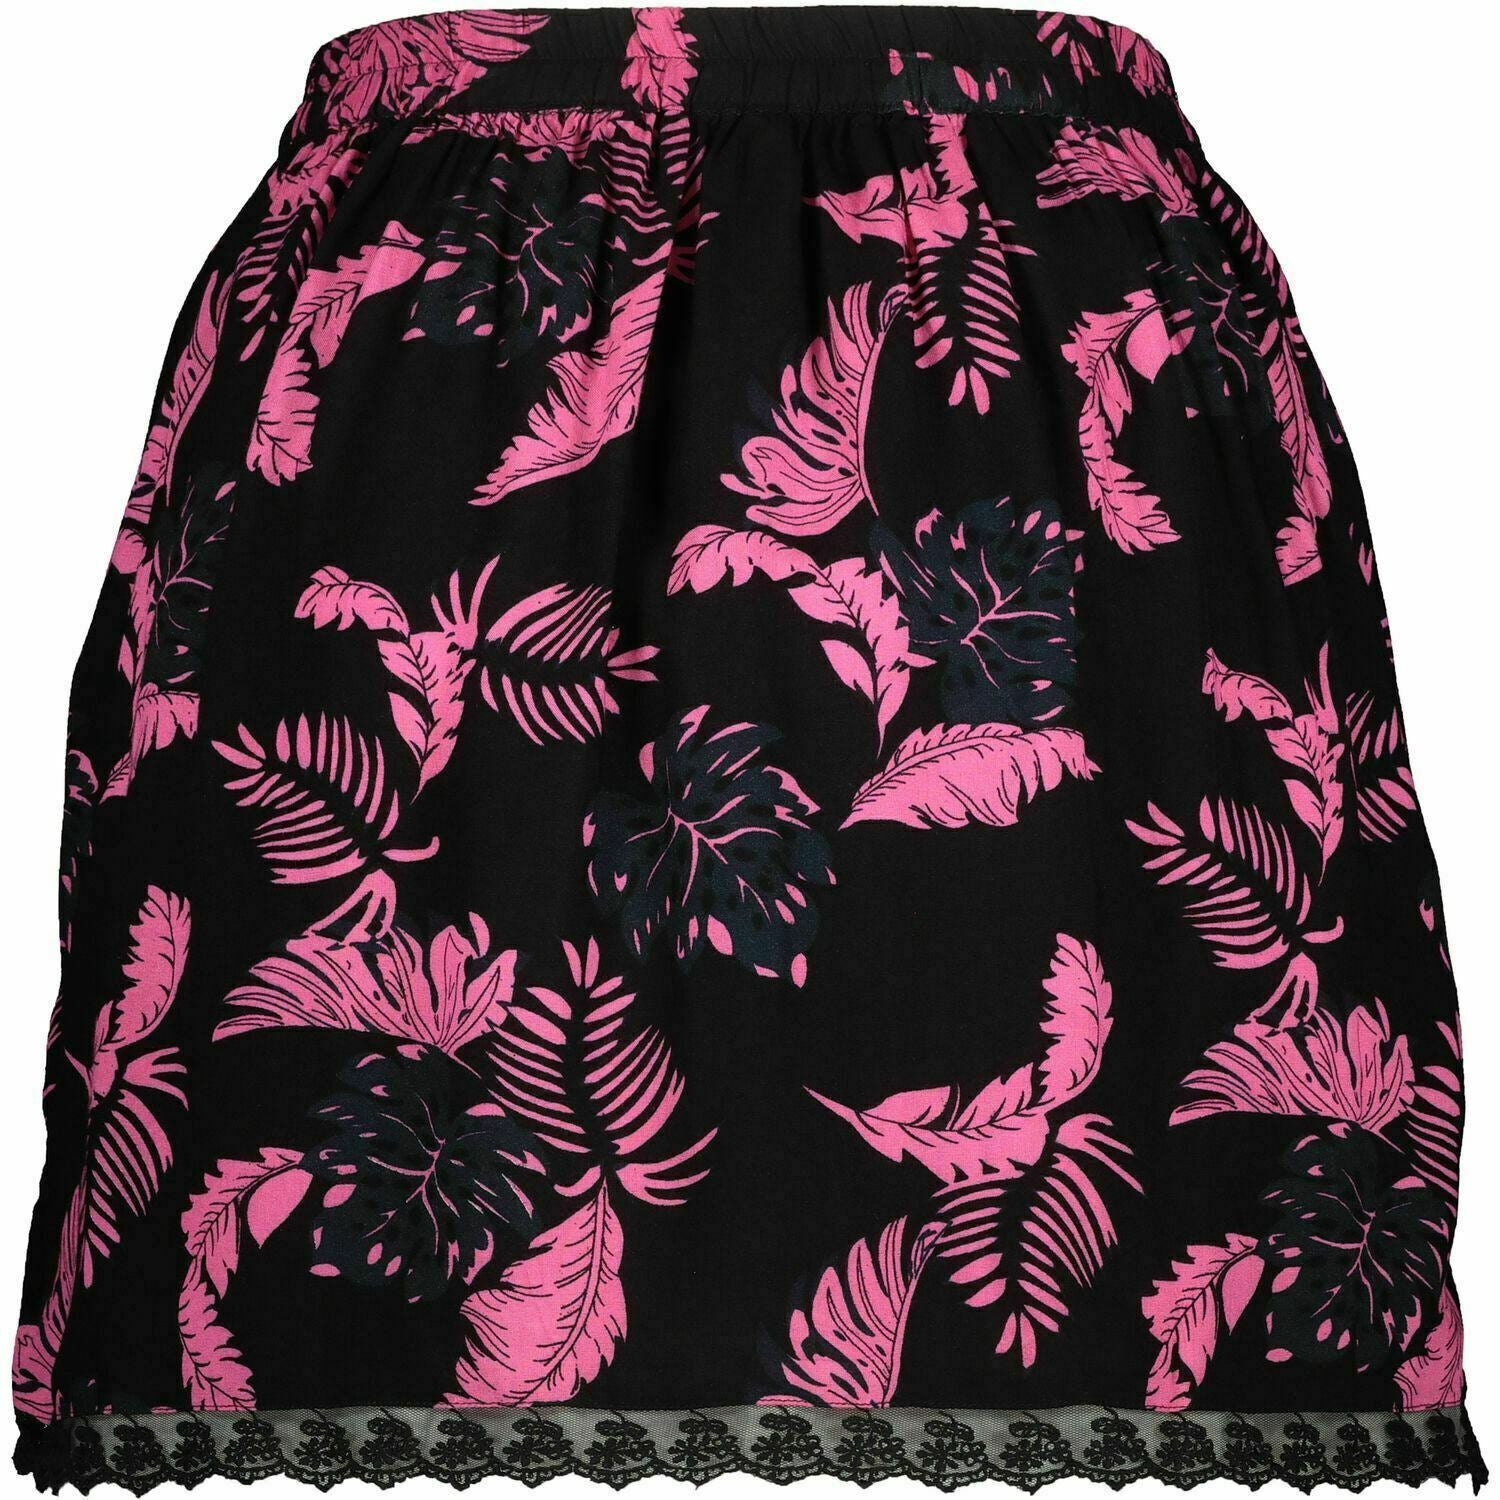 SUPERDRY Women's SERENA DITSY Skirt Black/Pink Palm Leaf Print size XS size UK 8